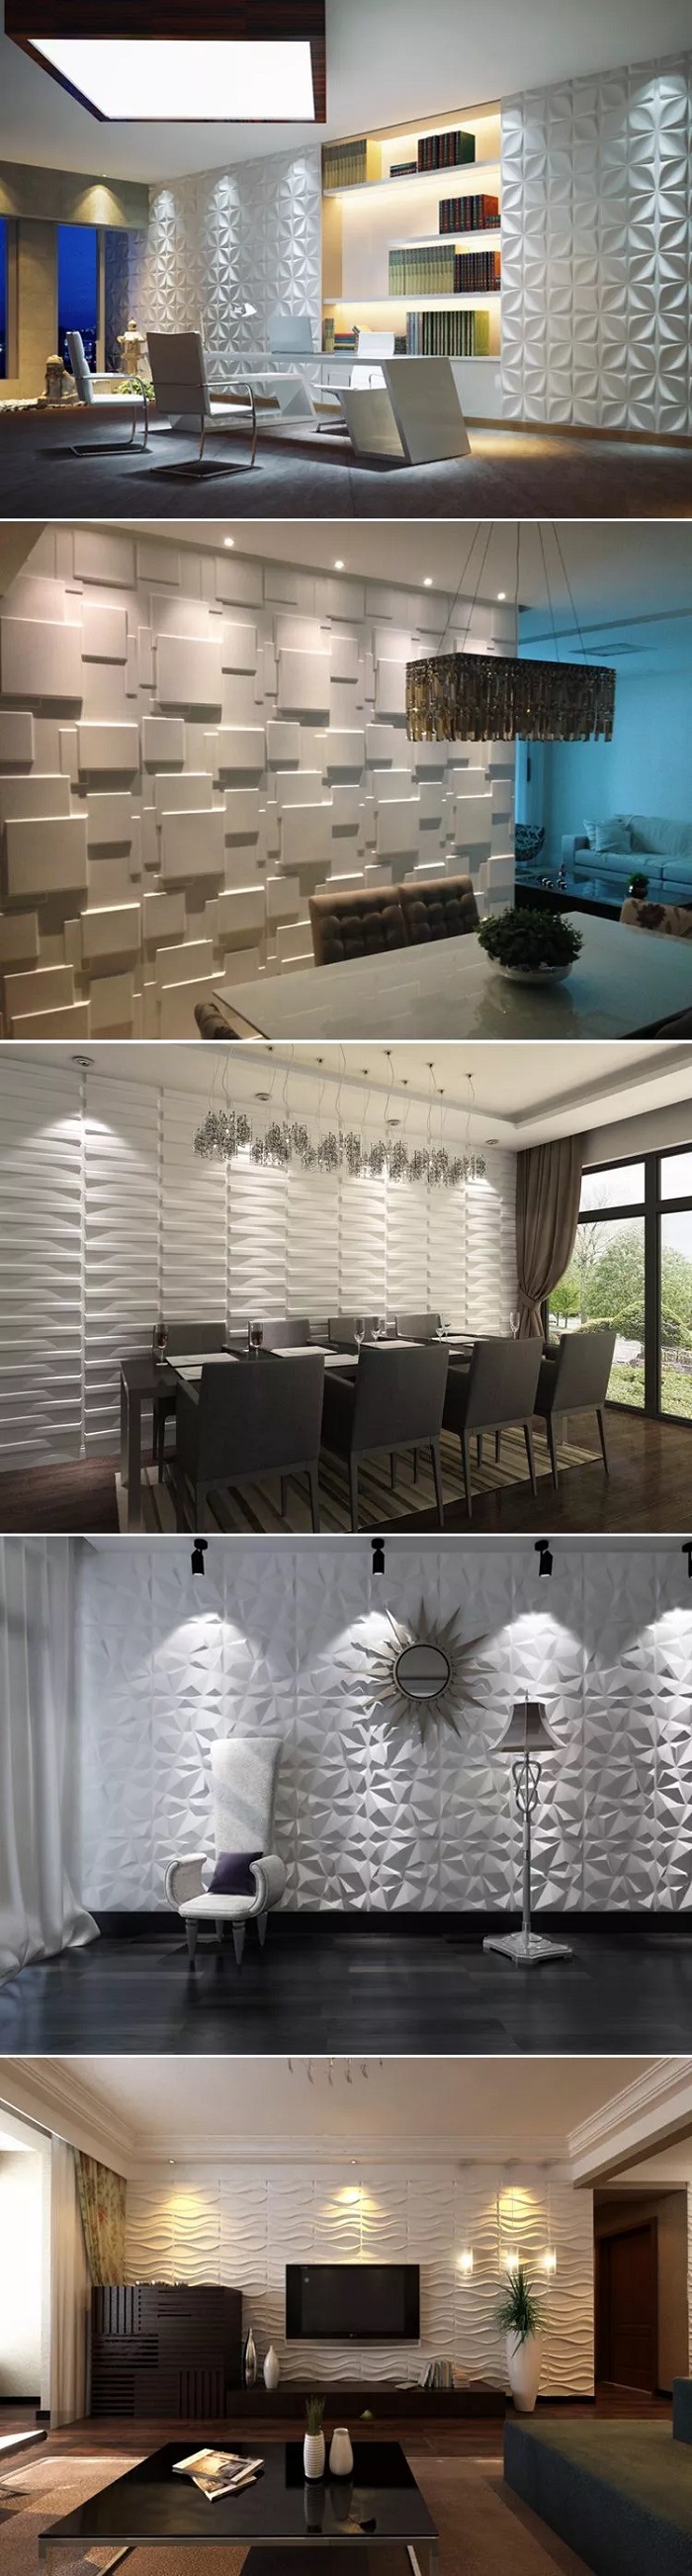 2020 Good Price Bathroom Decoration 3D PVC Ceiling Wall Panel